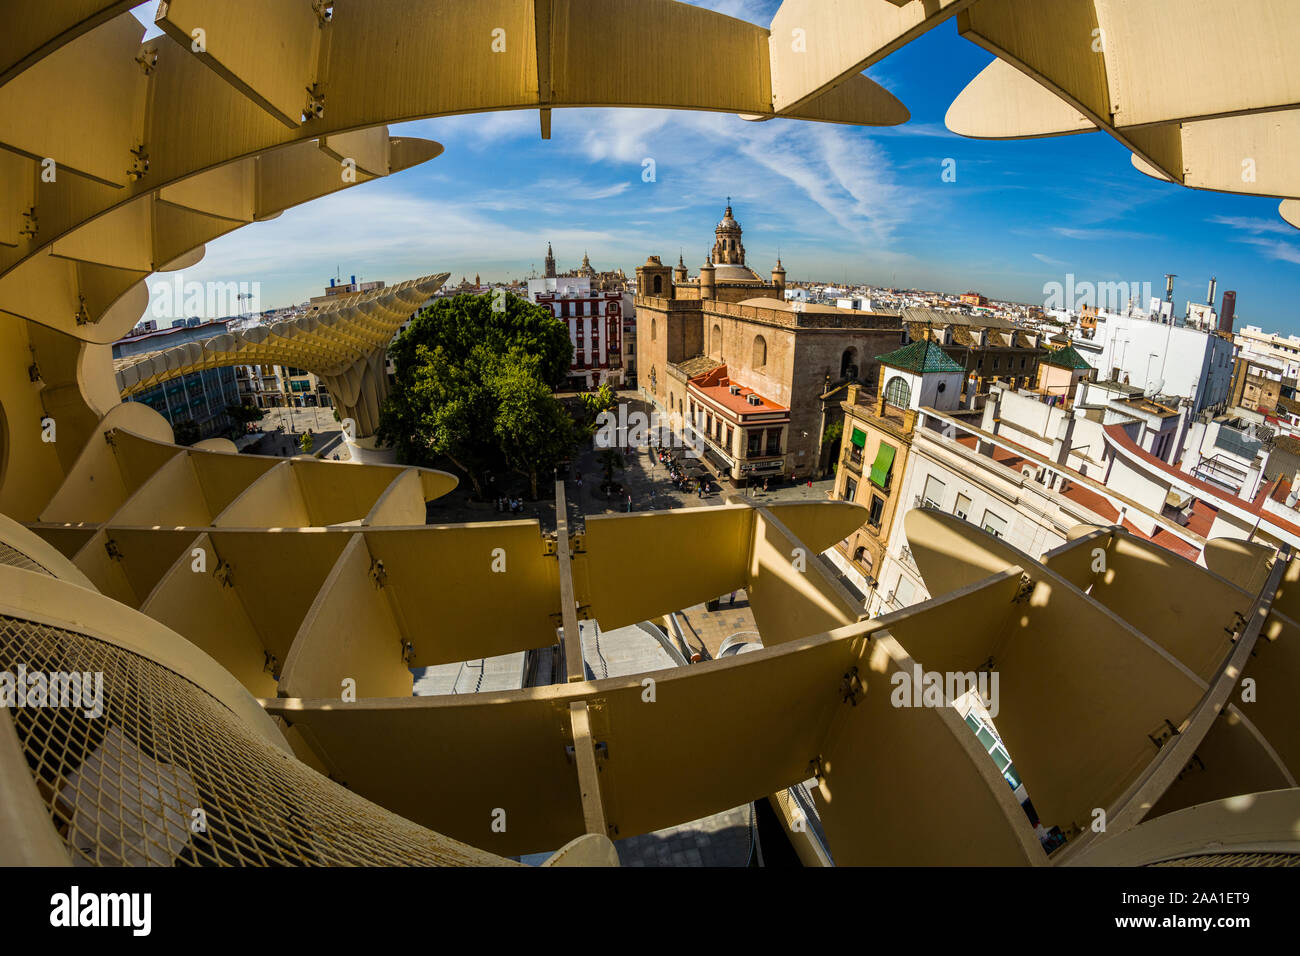 Mettopol Parasol or Incarnacion’s Mushrooms a wooden structure in La Encarnacion square in Seville Spain Stock Photo